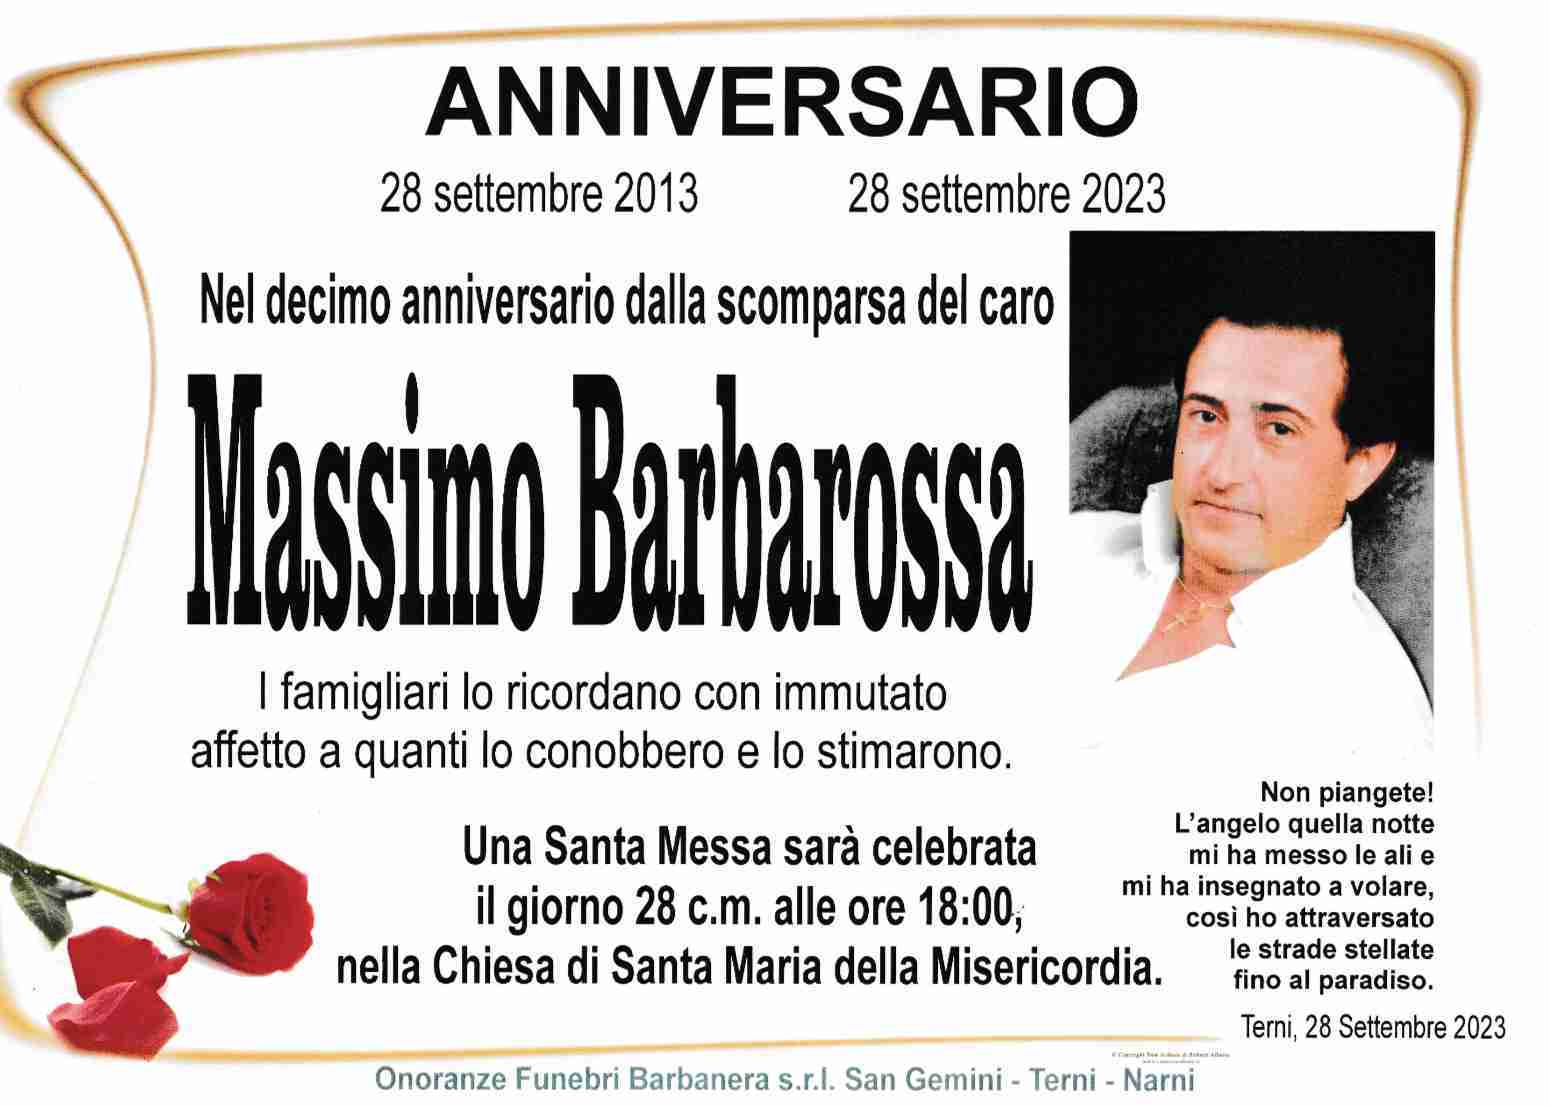 Massimo Barbarossa